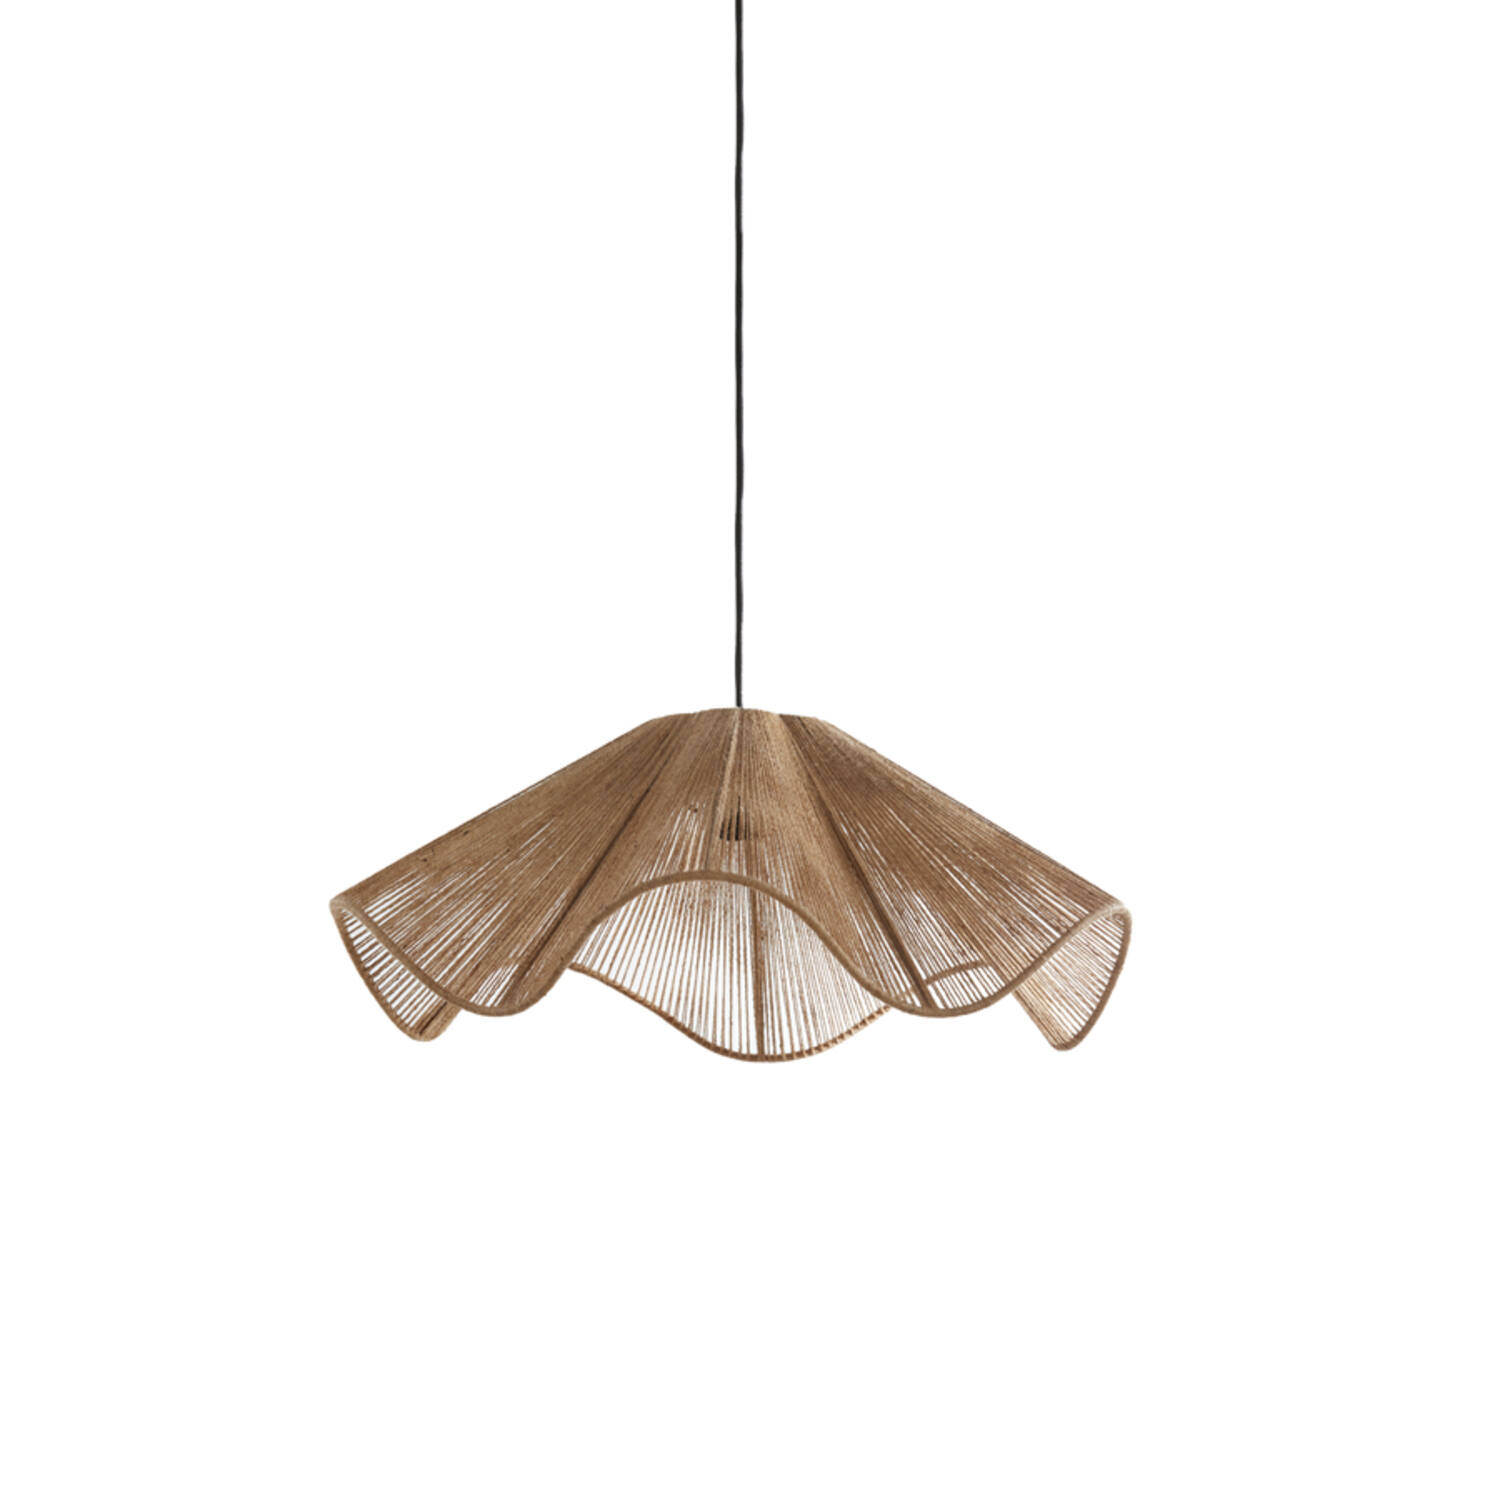 Light & Living Hanglamp Fodara Jute, 60cm - Naturel